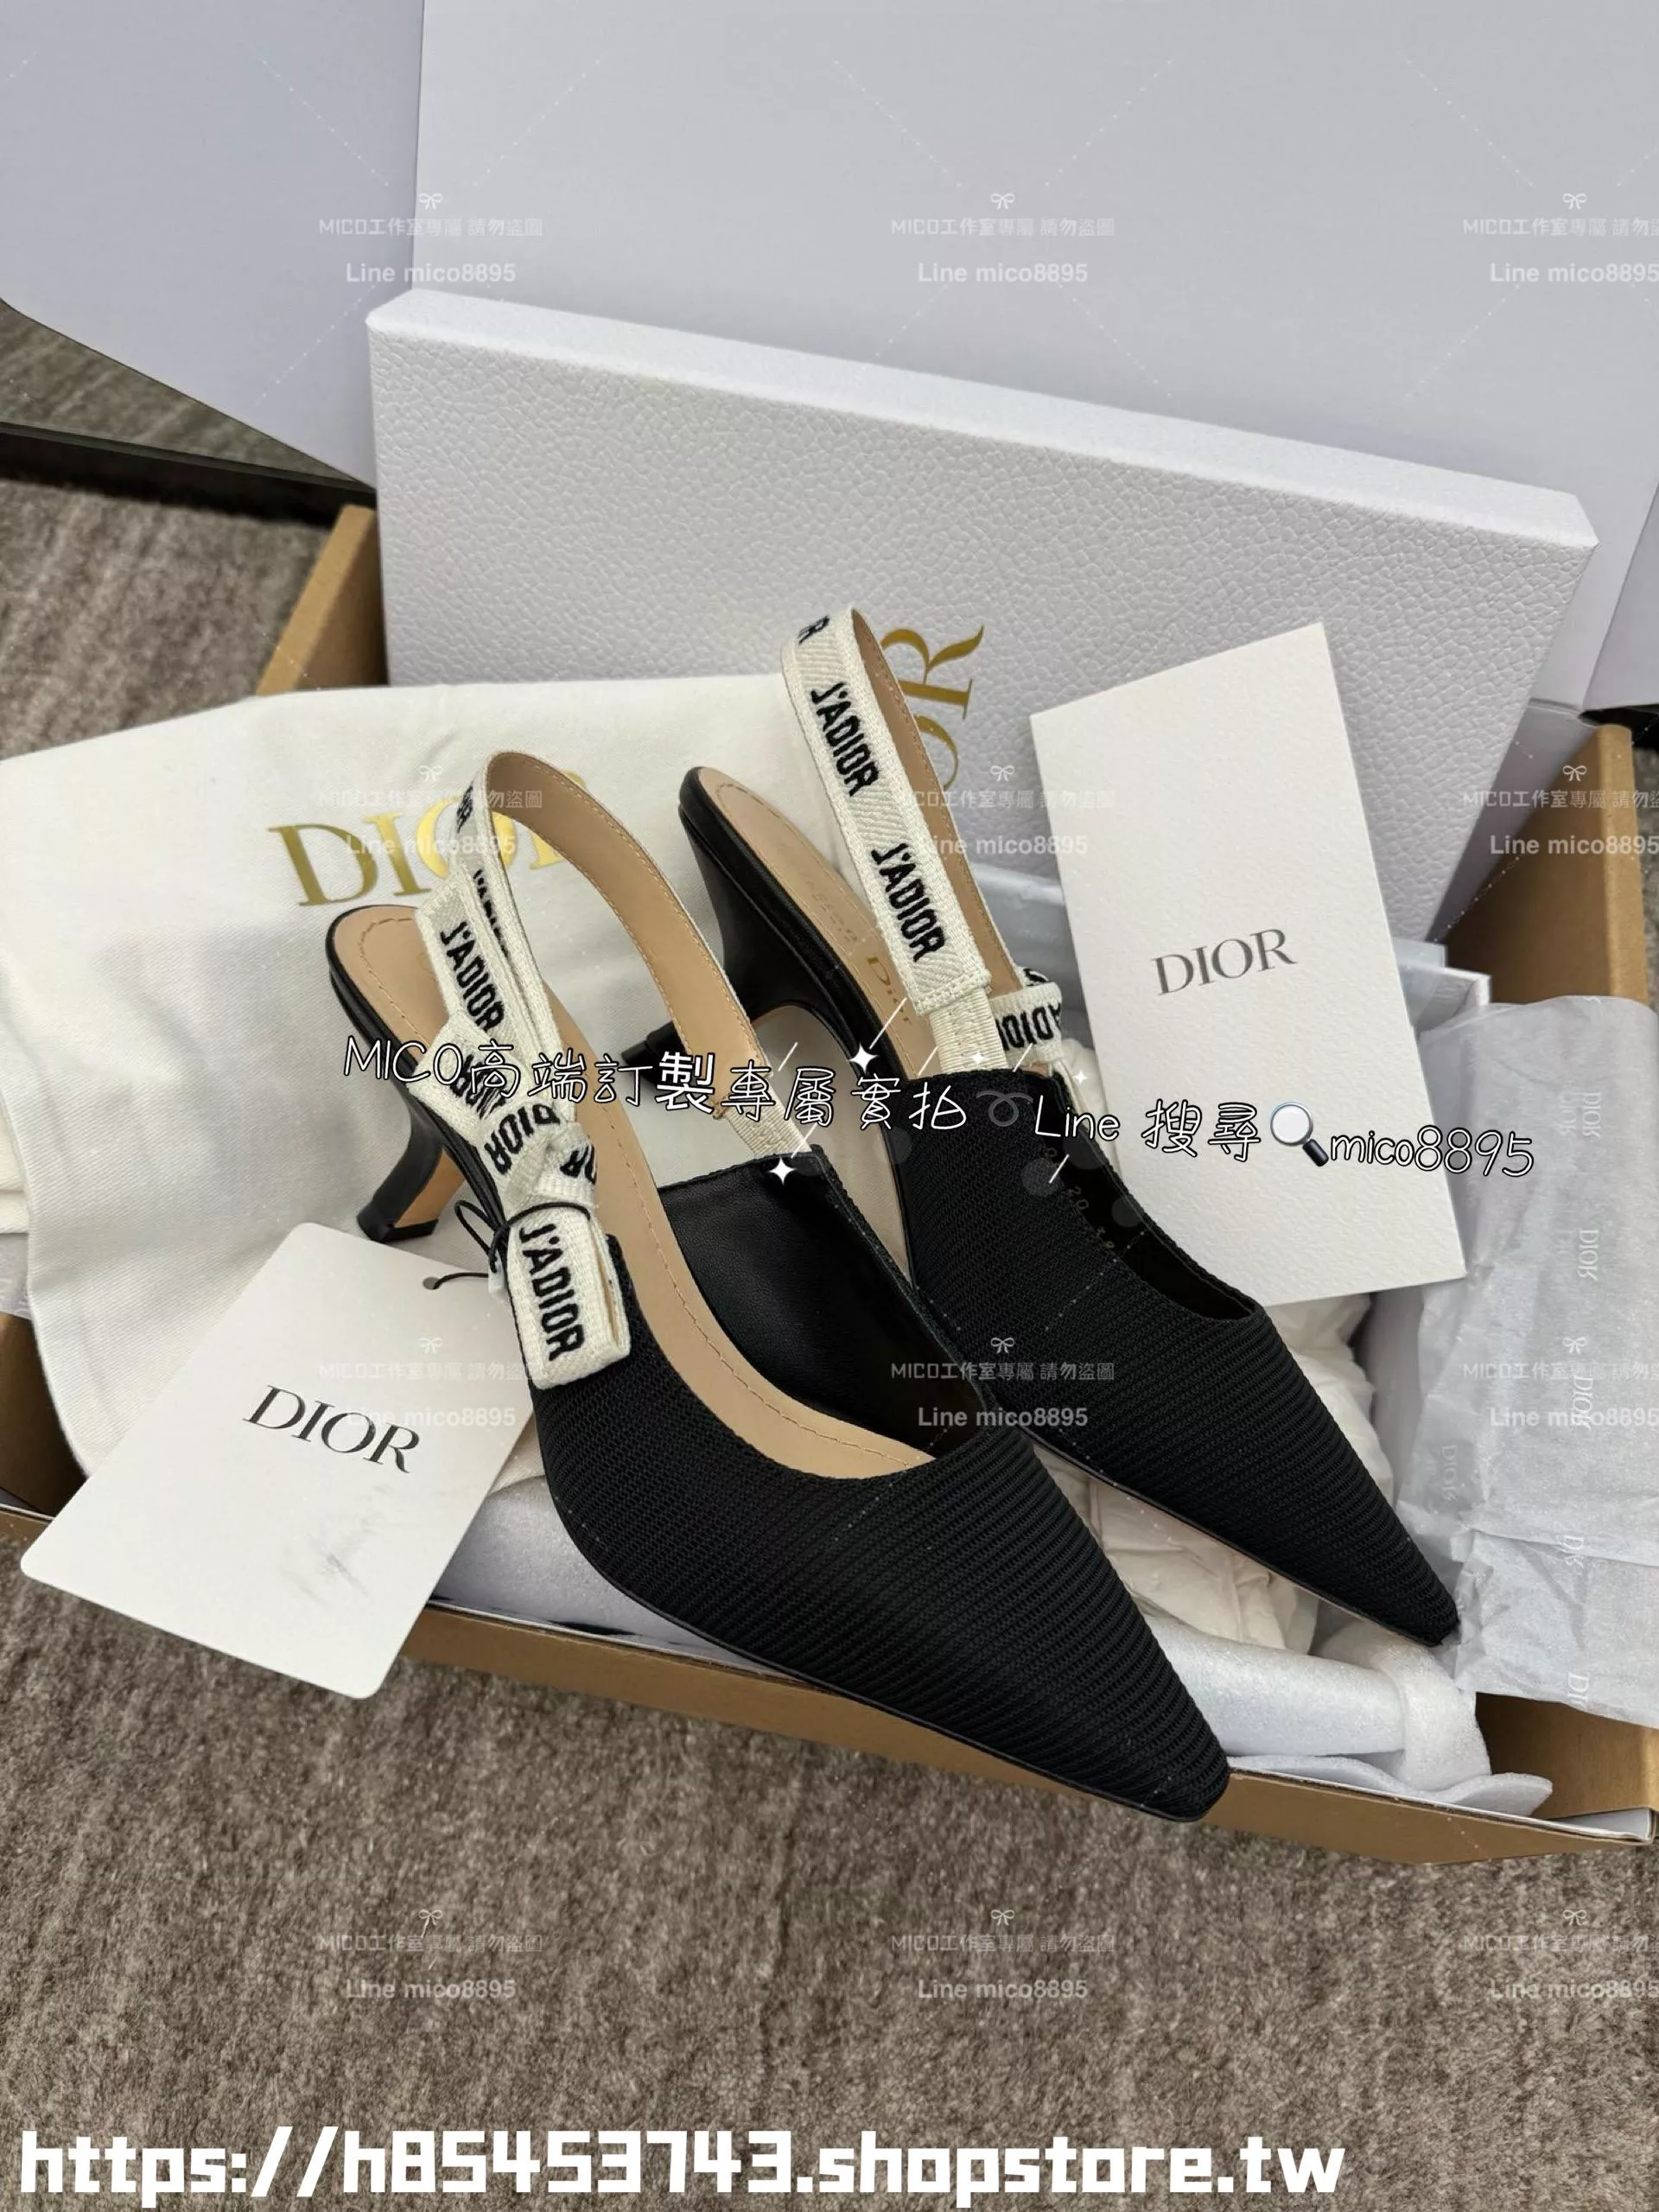 Dior 經典款 小貓跟蝴蝶鞋繫帶低跟鞋/跟鞋 4.5cm 35-40